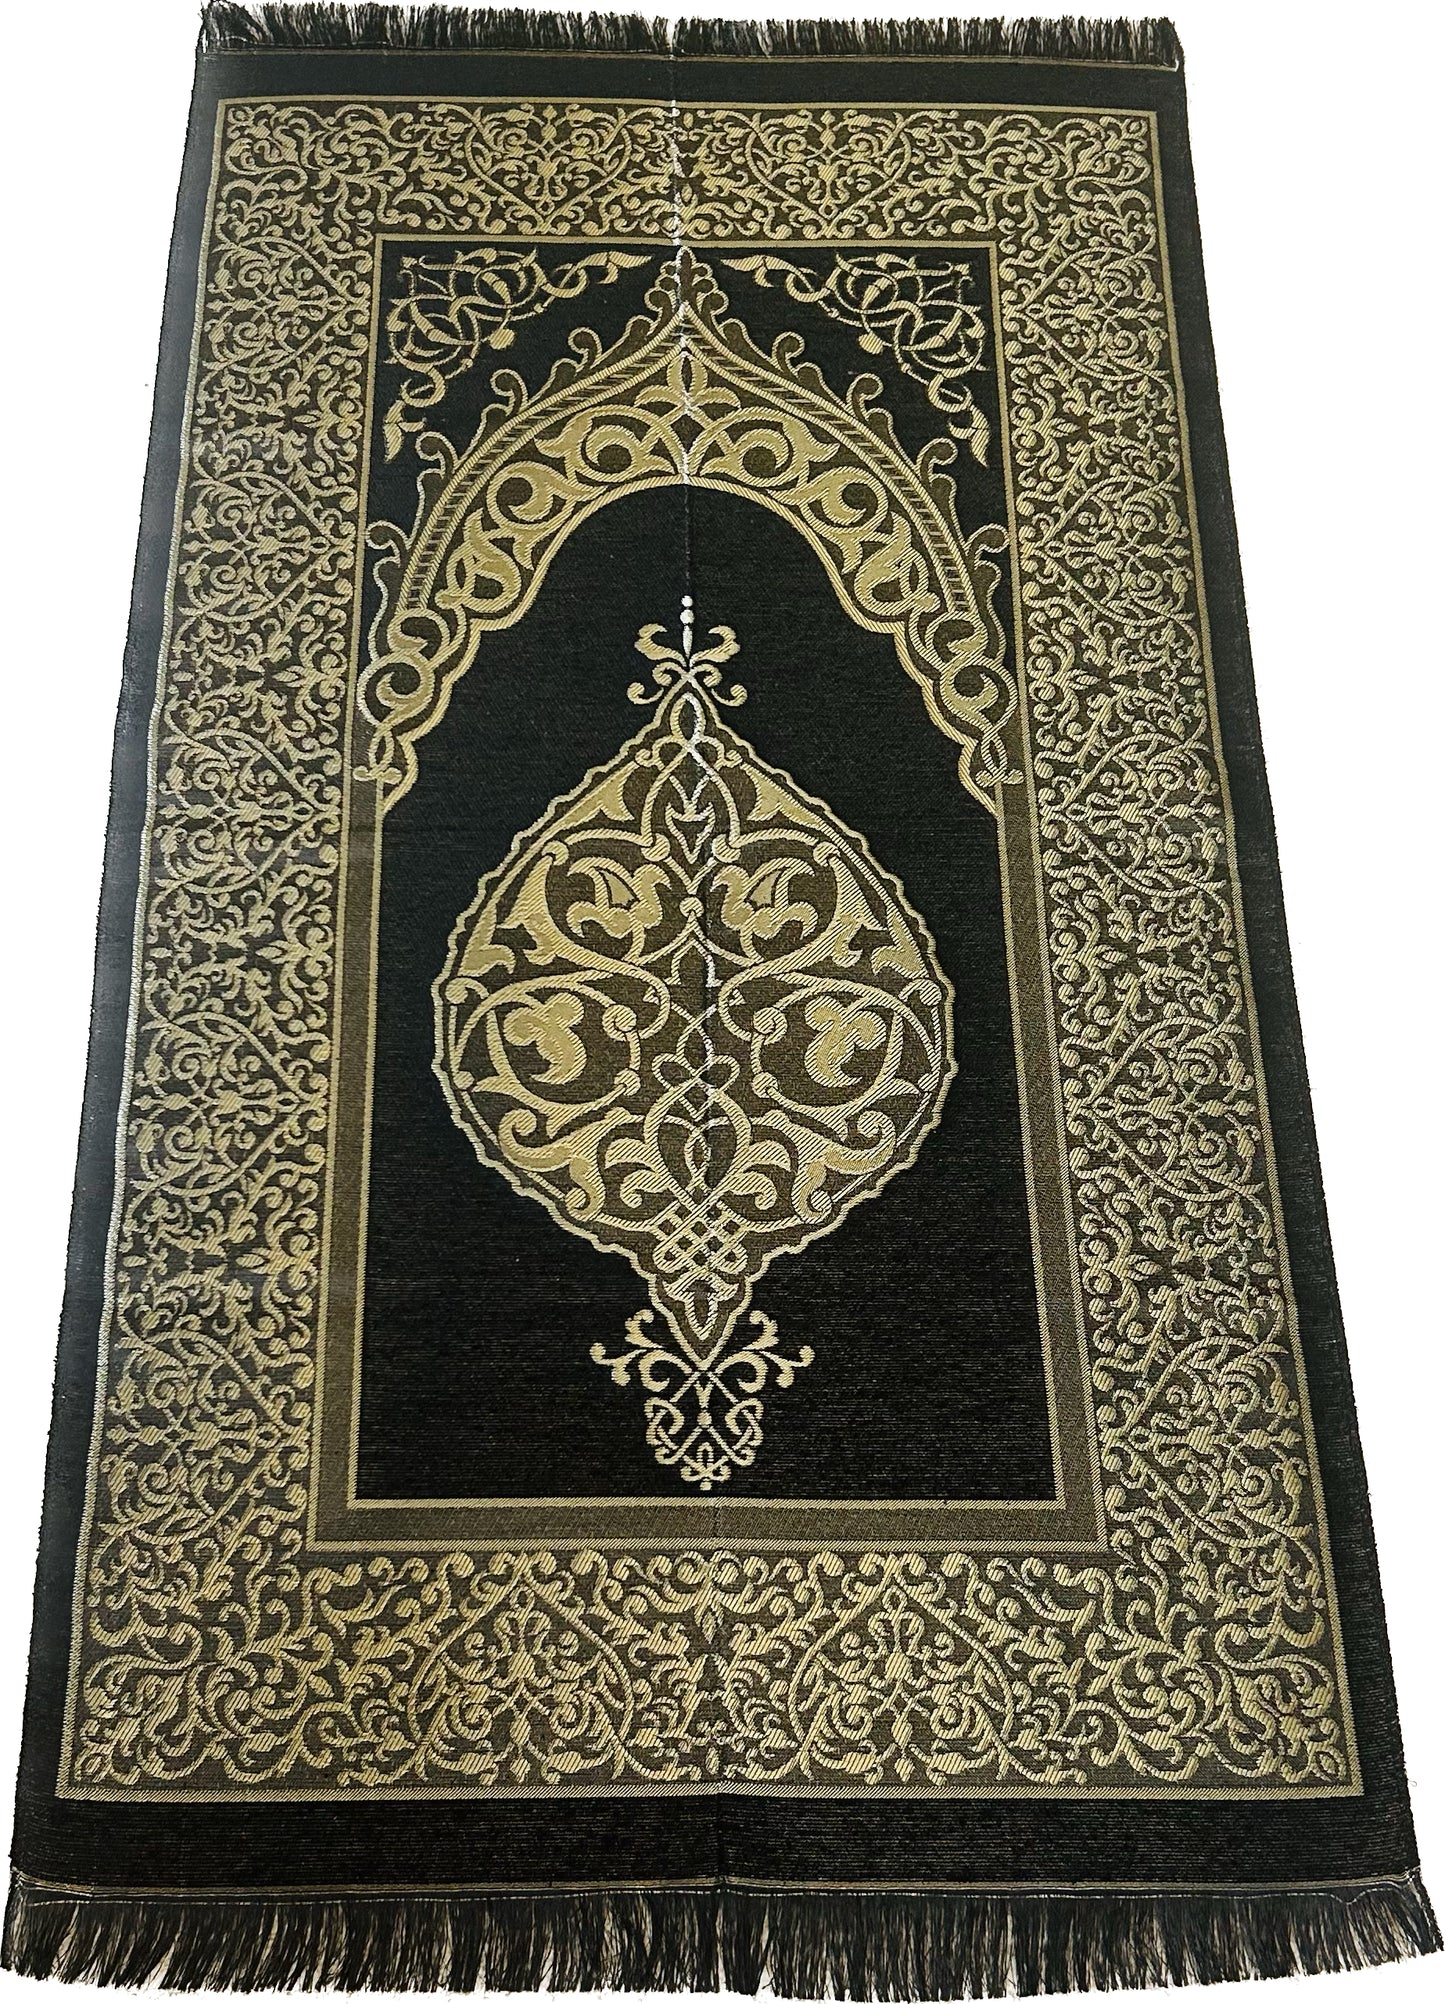 Mihrab Taffeta Ottoman Portable Prayer Mat